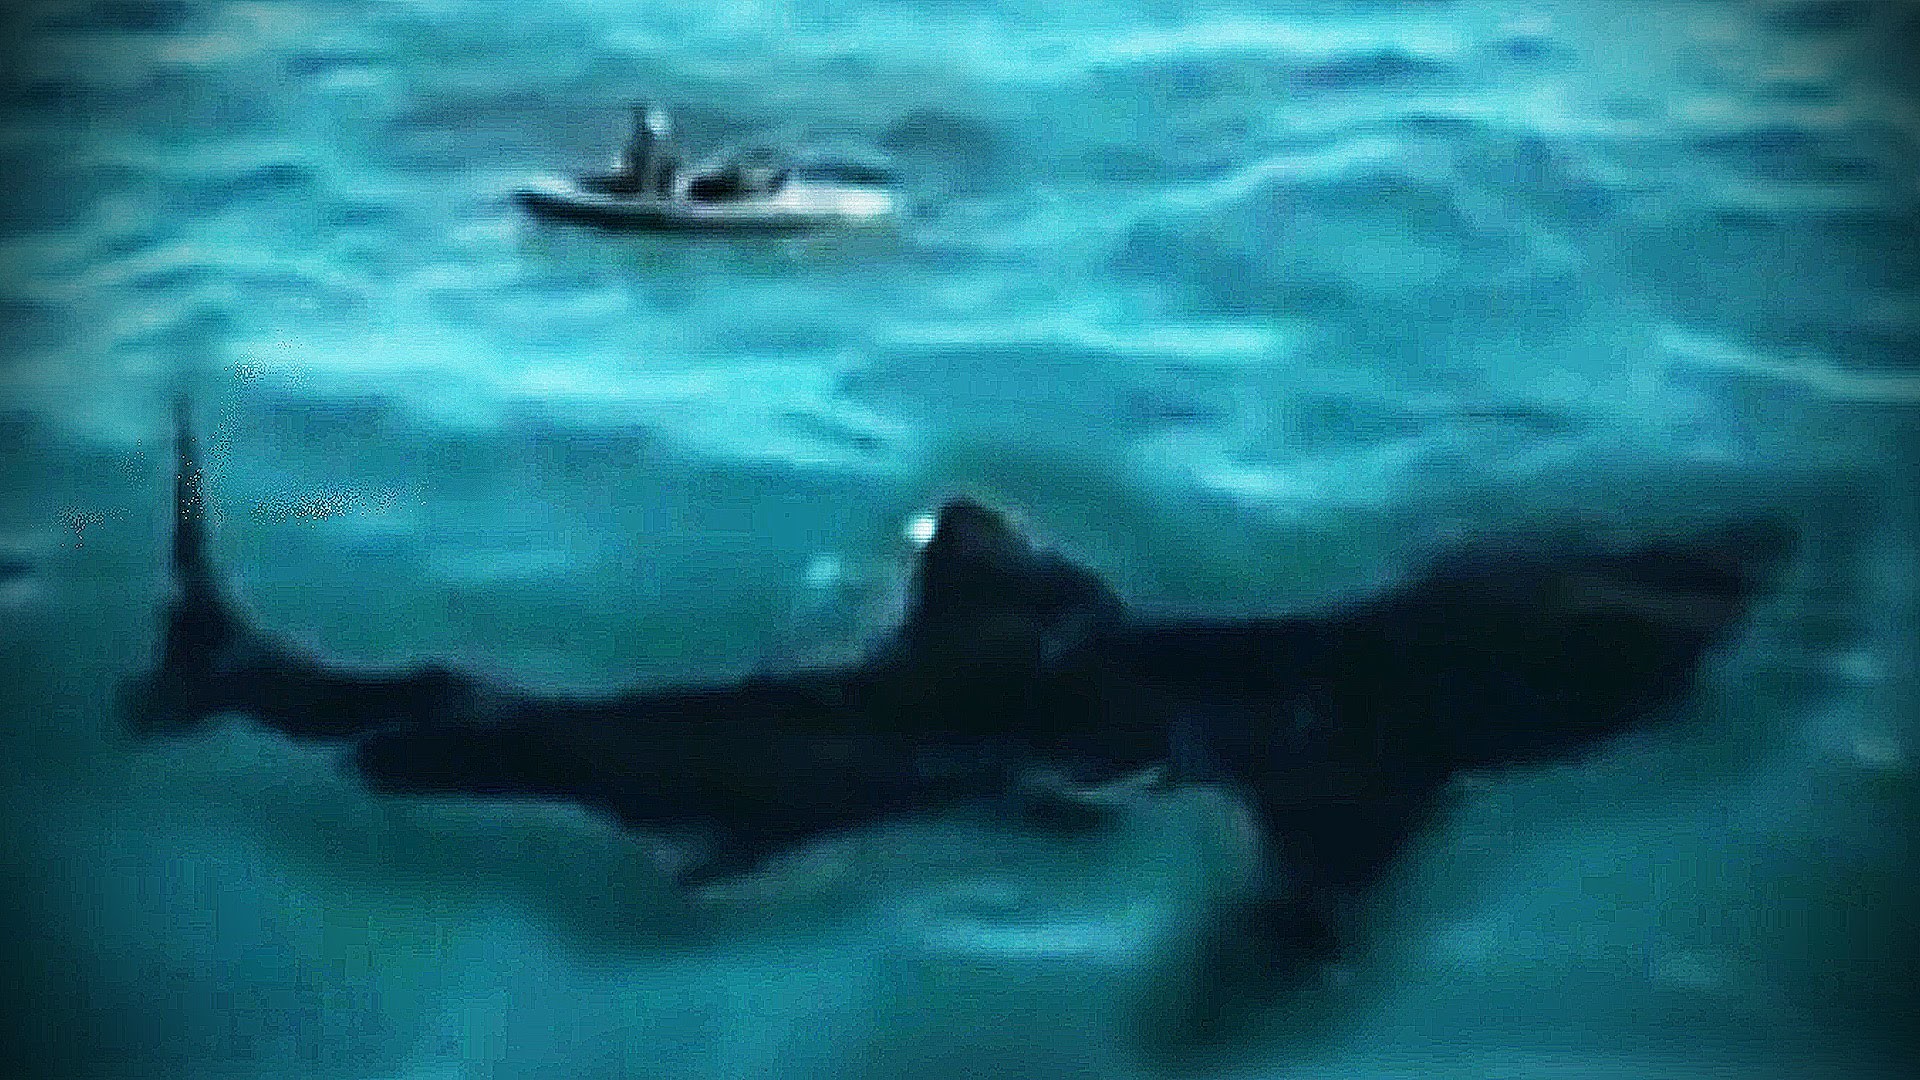 1920x1080 The Megalodon Shark Caught on Tape - 42ft Shark Approaches Scared Kayaker